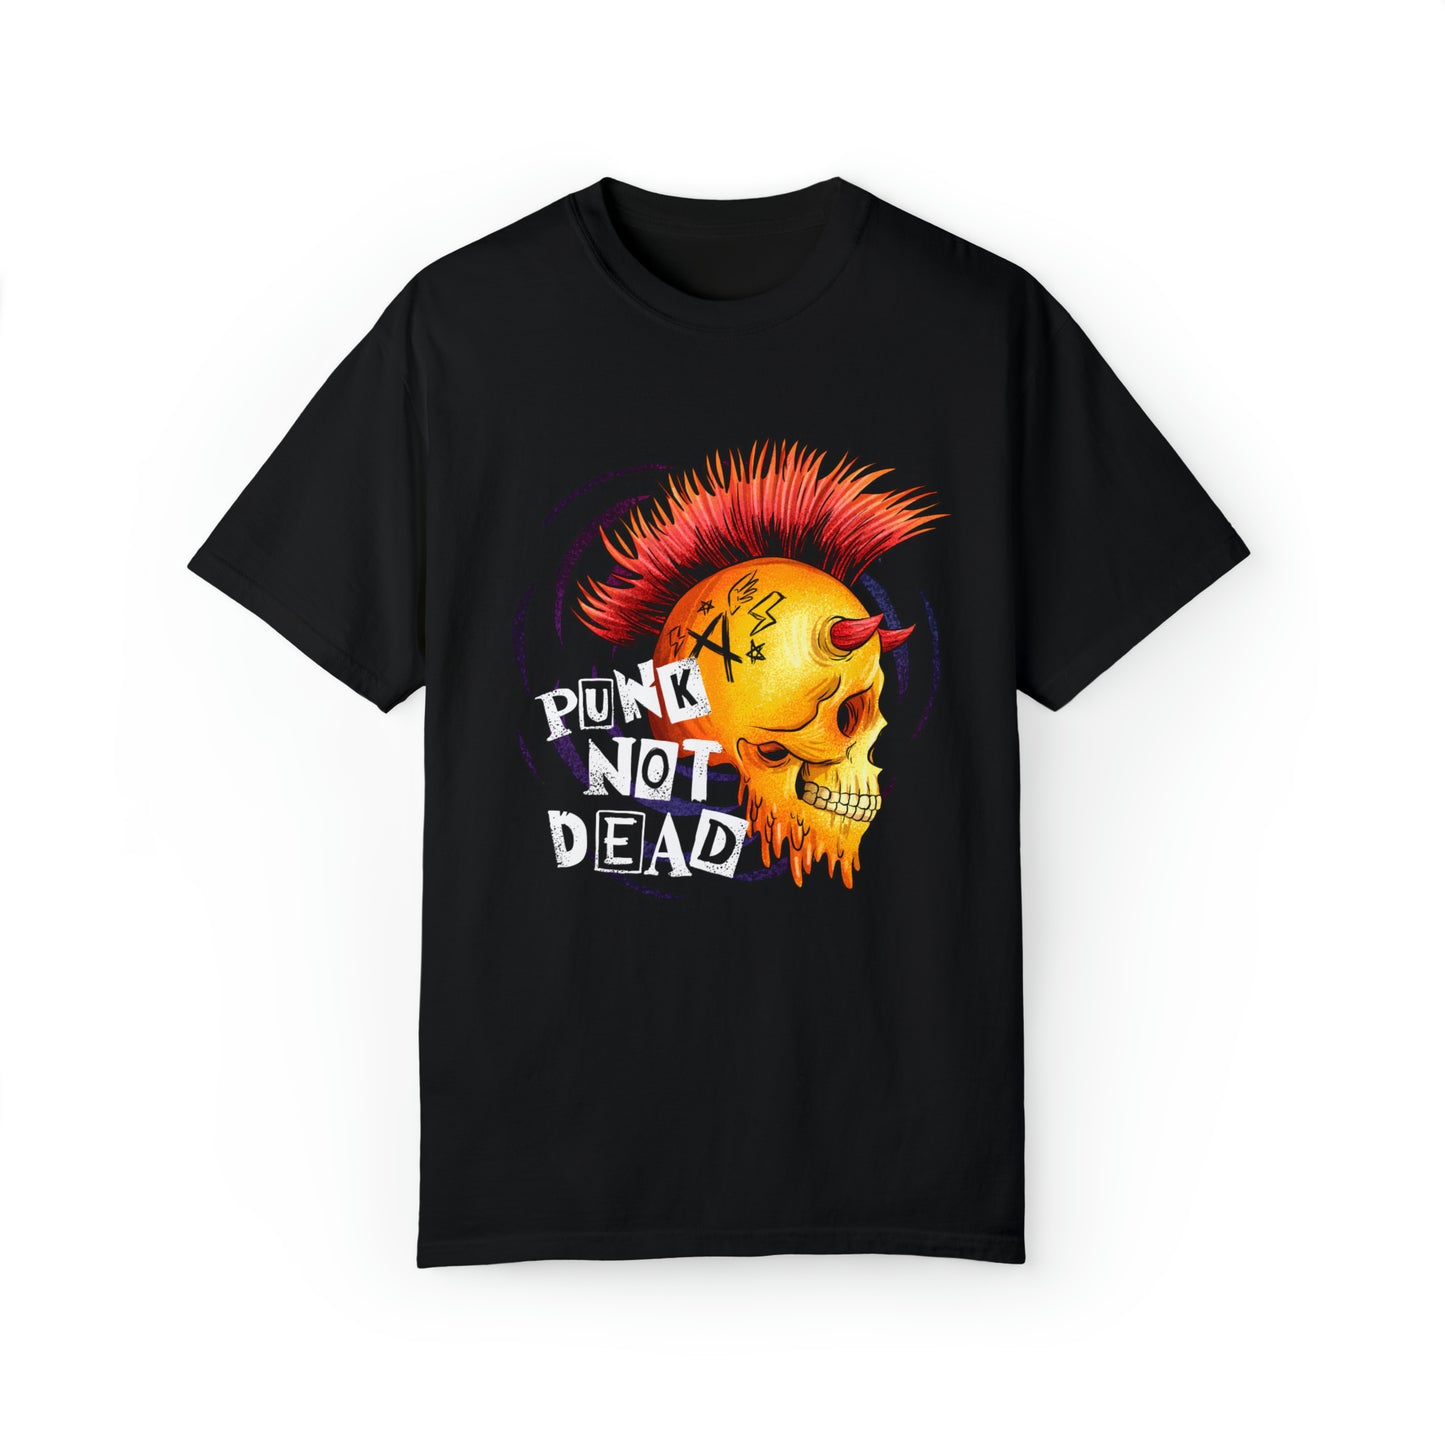 Punk Not Dead tshirt